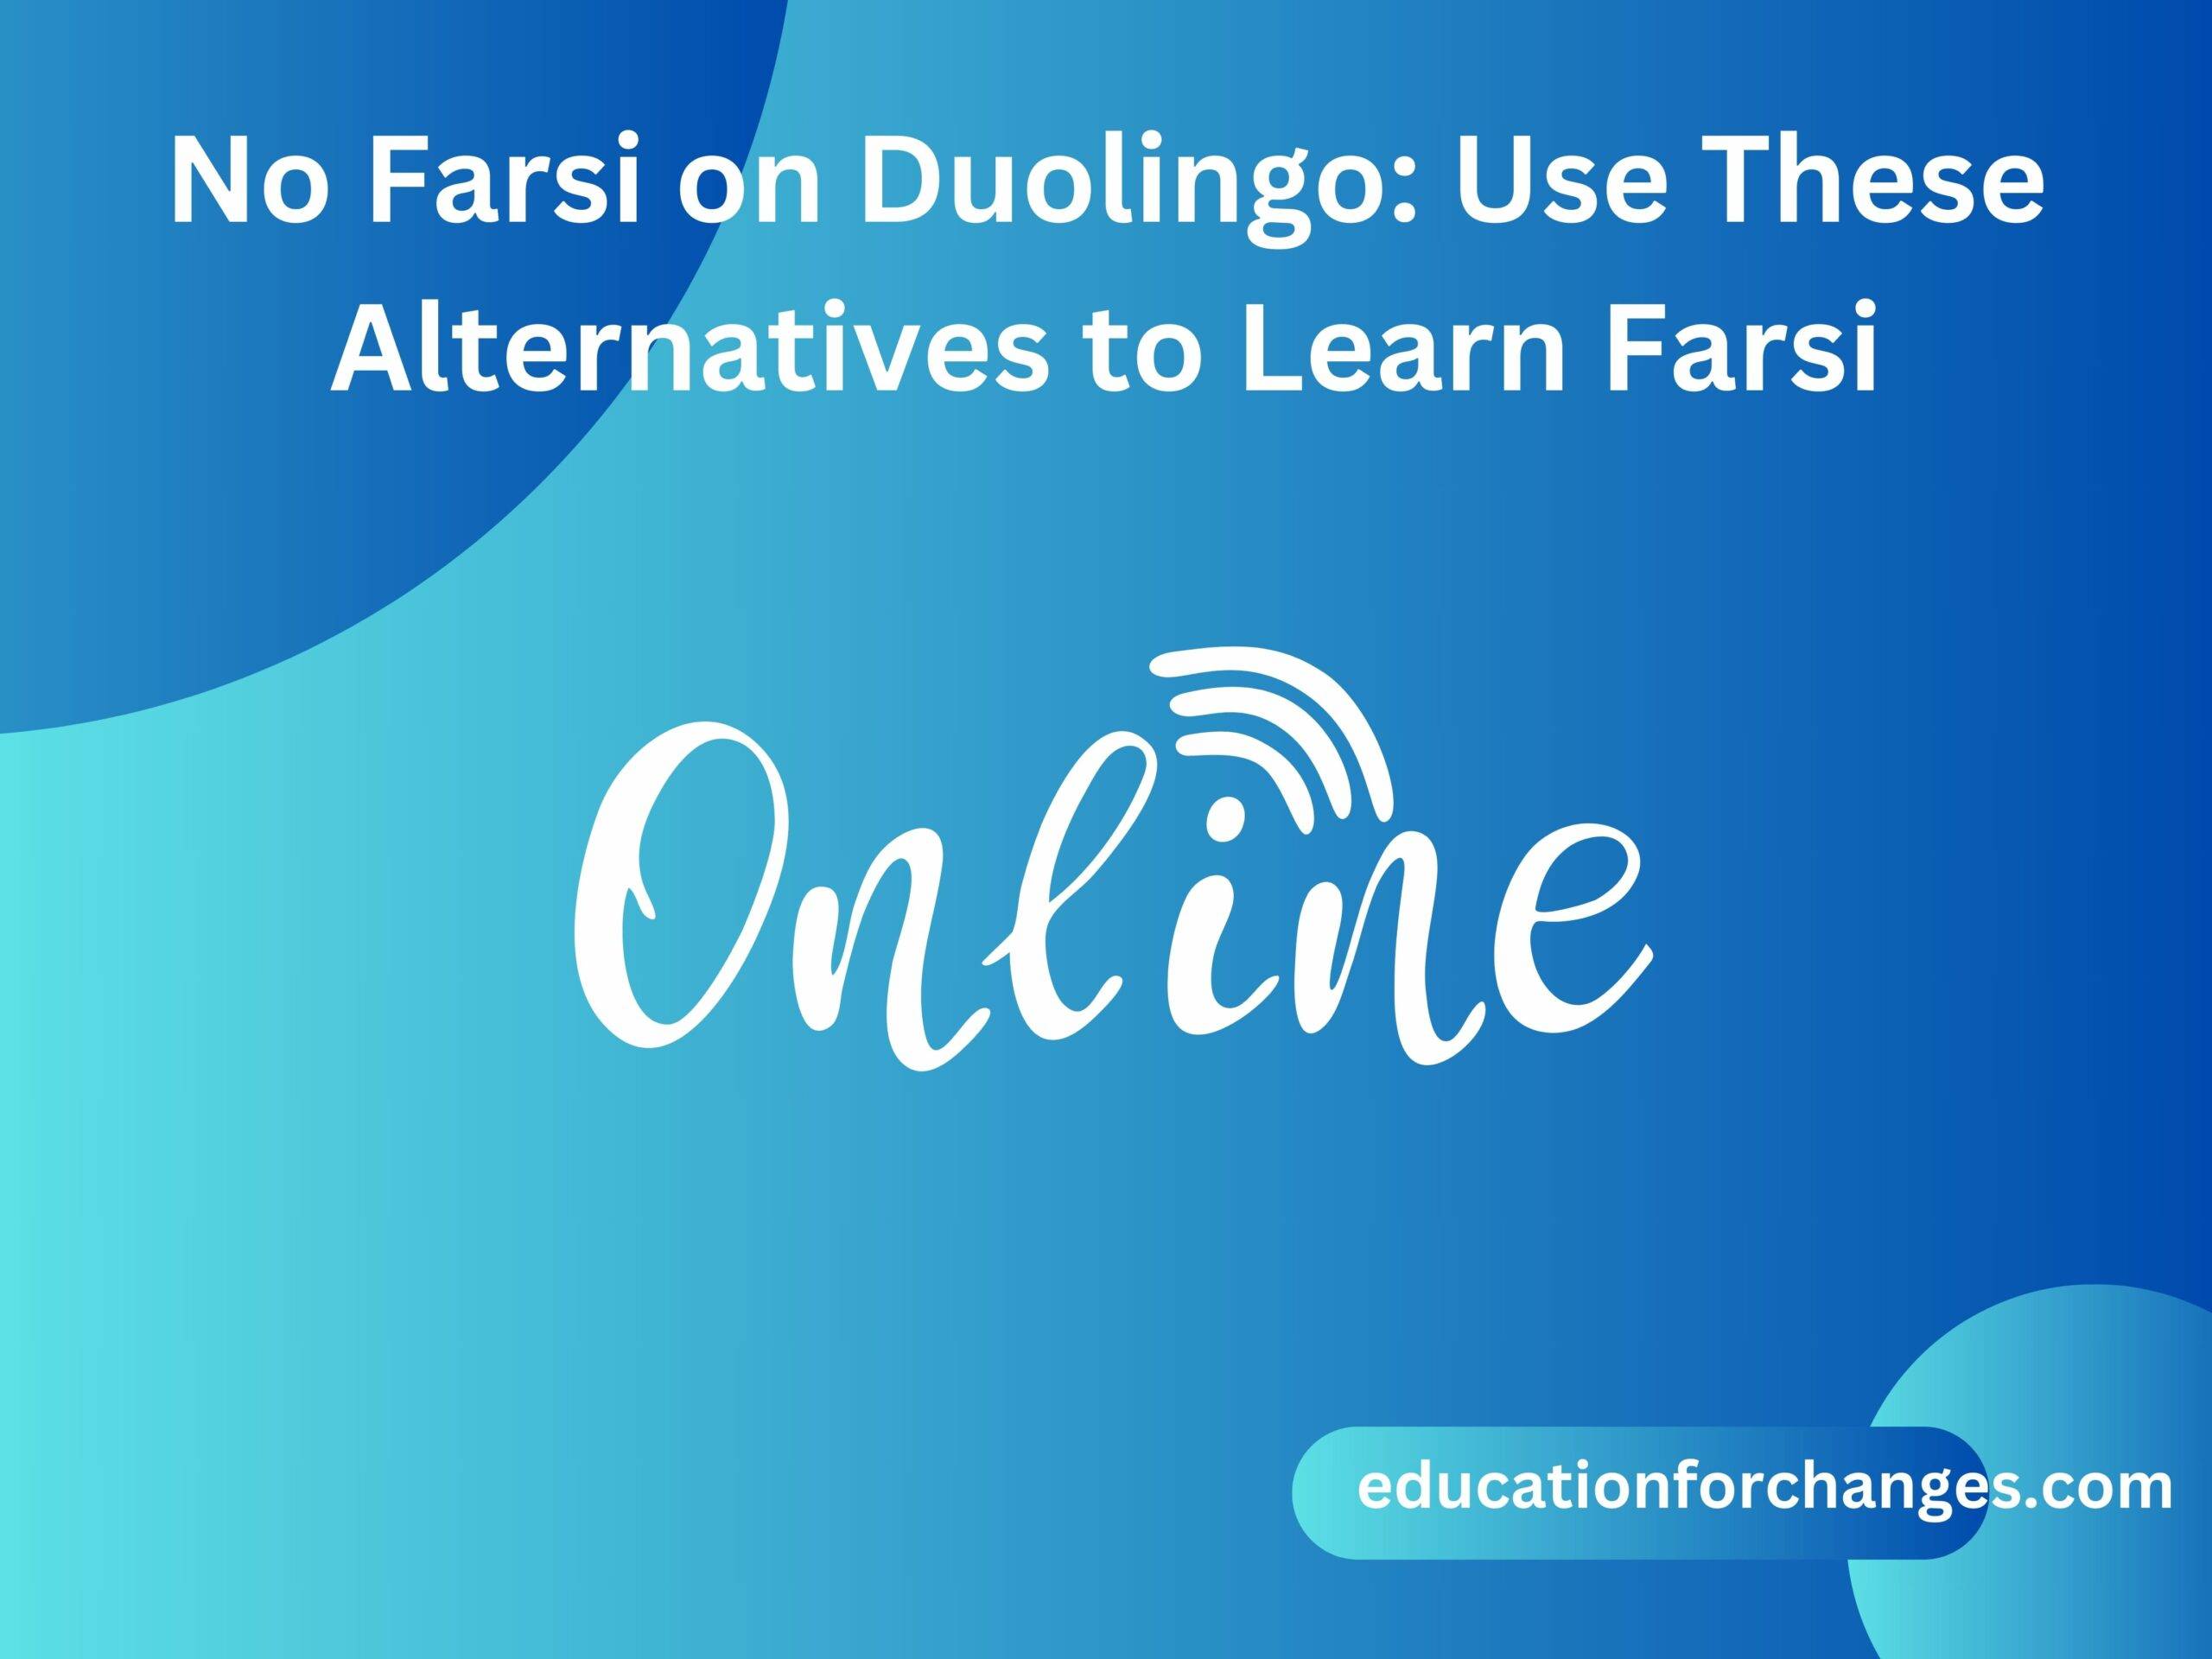 No Farsi on Duolingo: Use These Alternatives to Learn Farsi